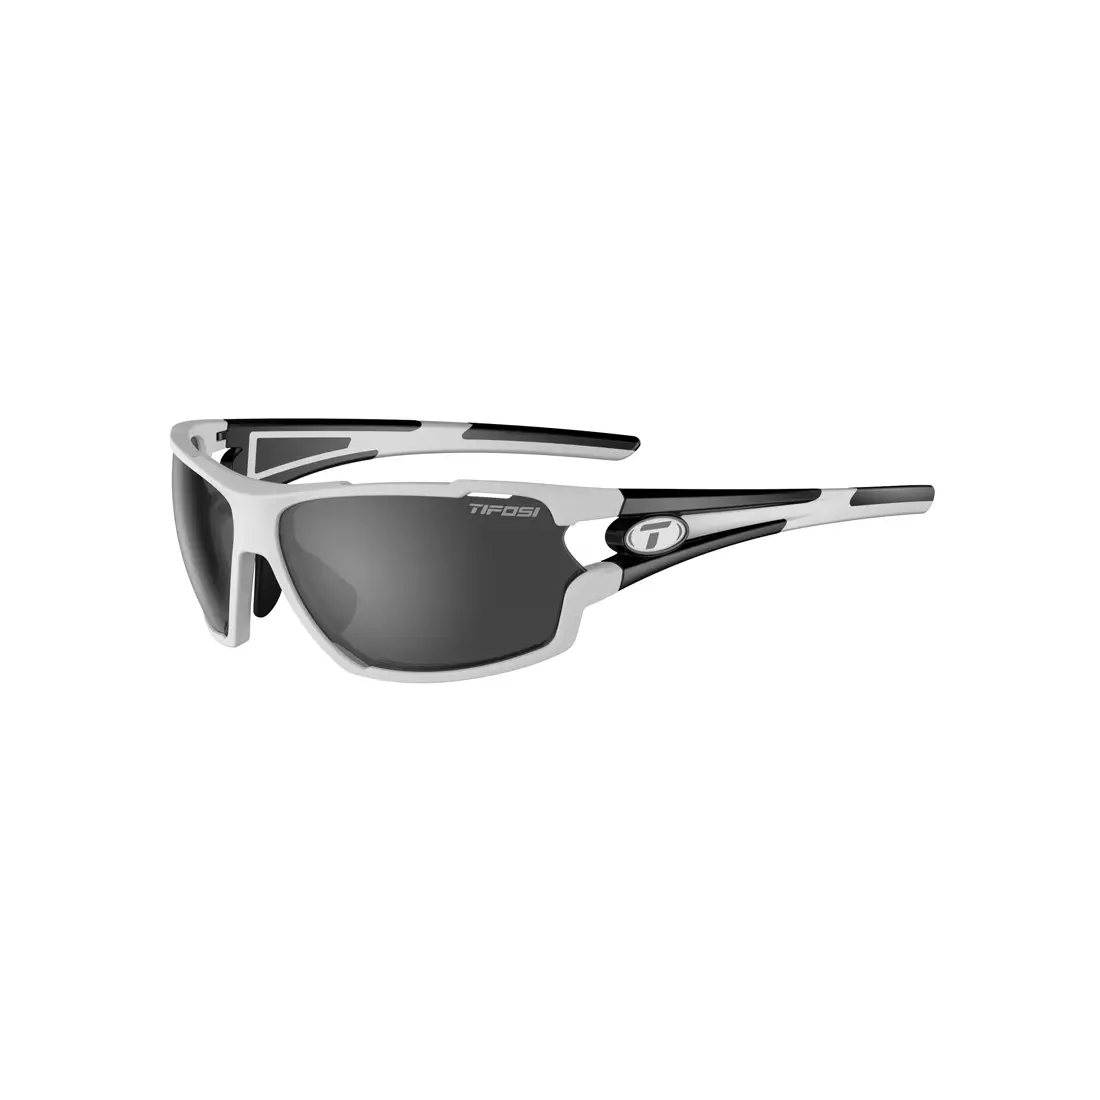 goggles with interchangeable glasses TIFOSI AMOK white black TFI-1540104801